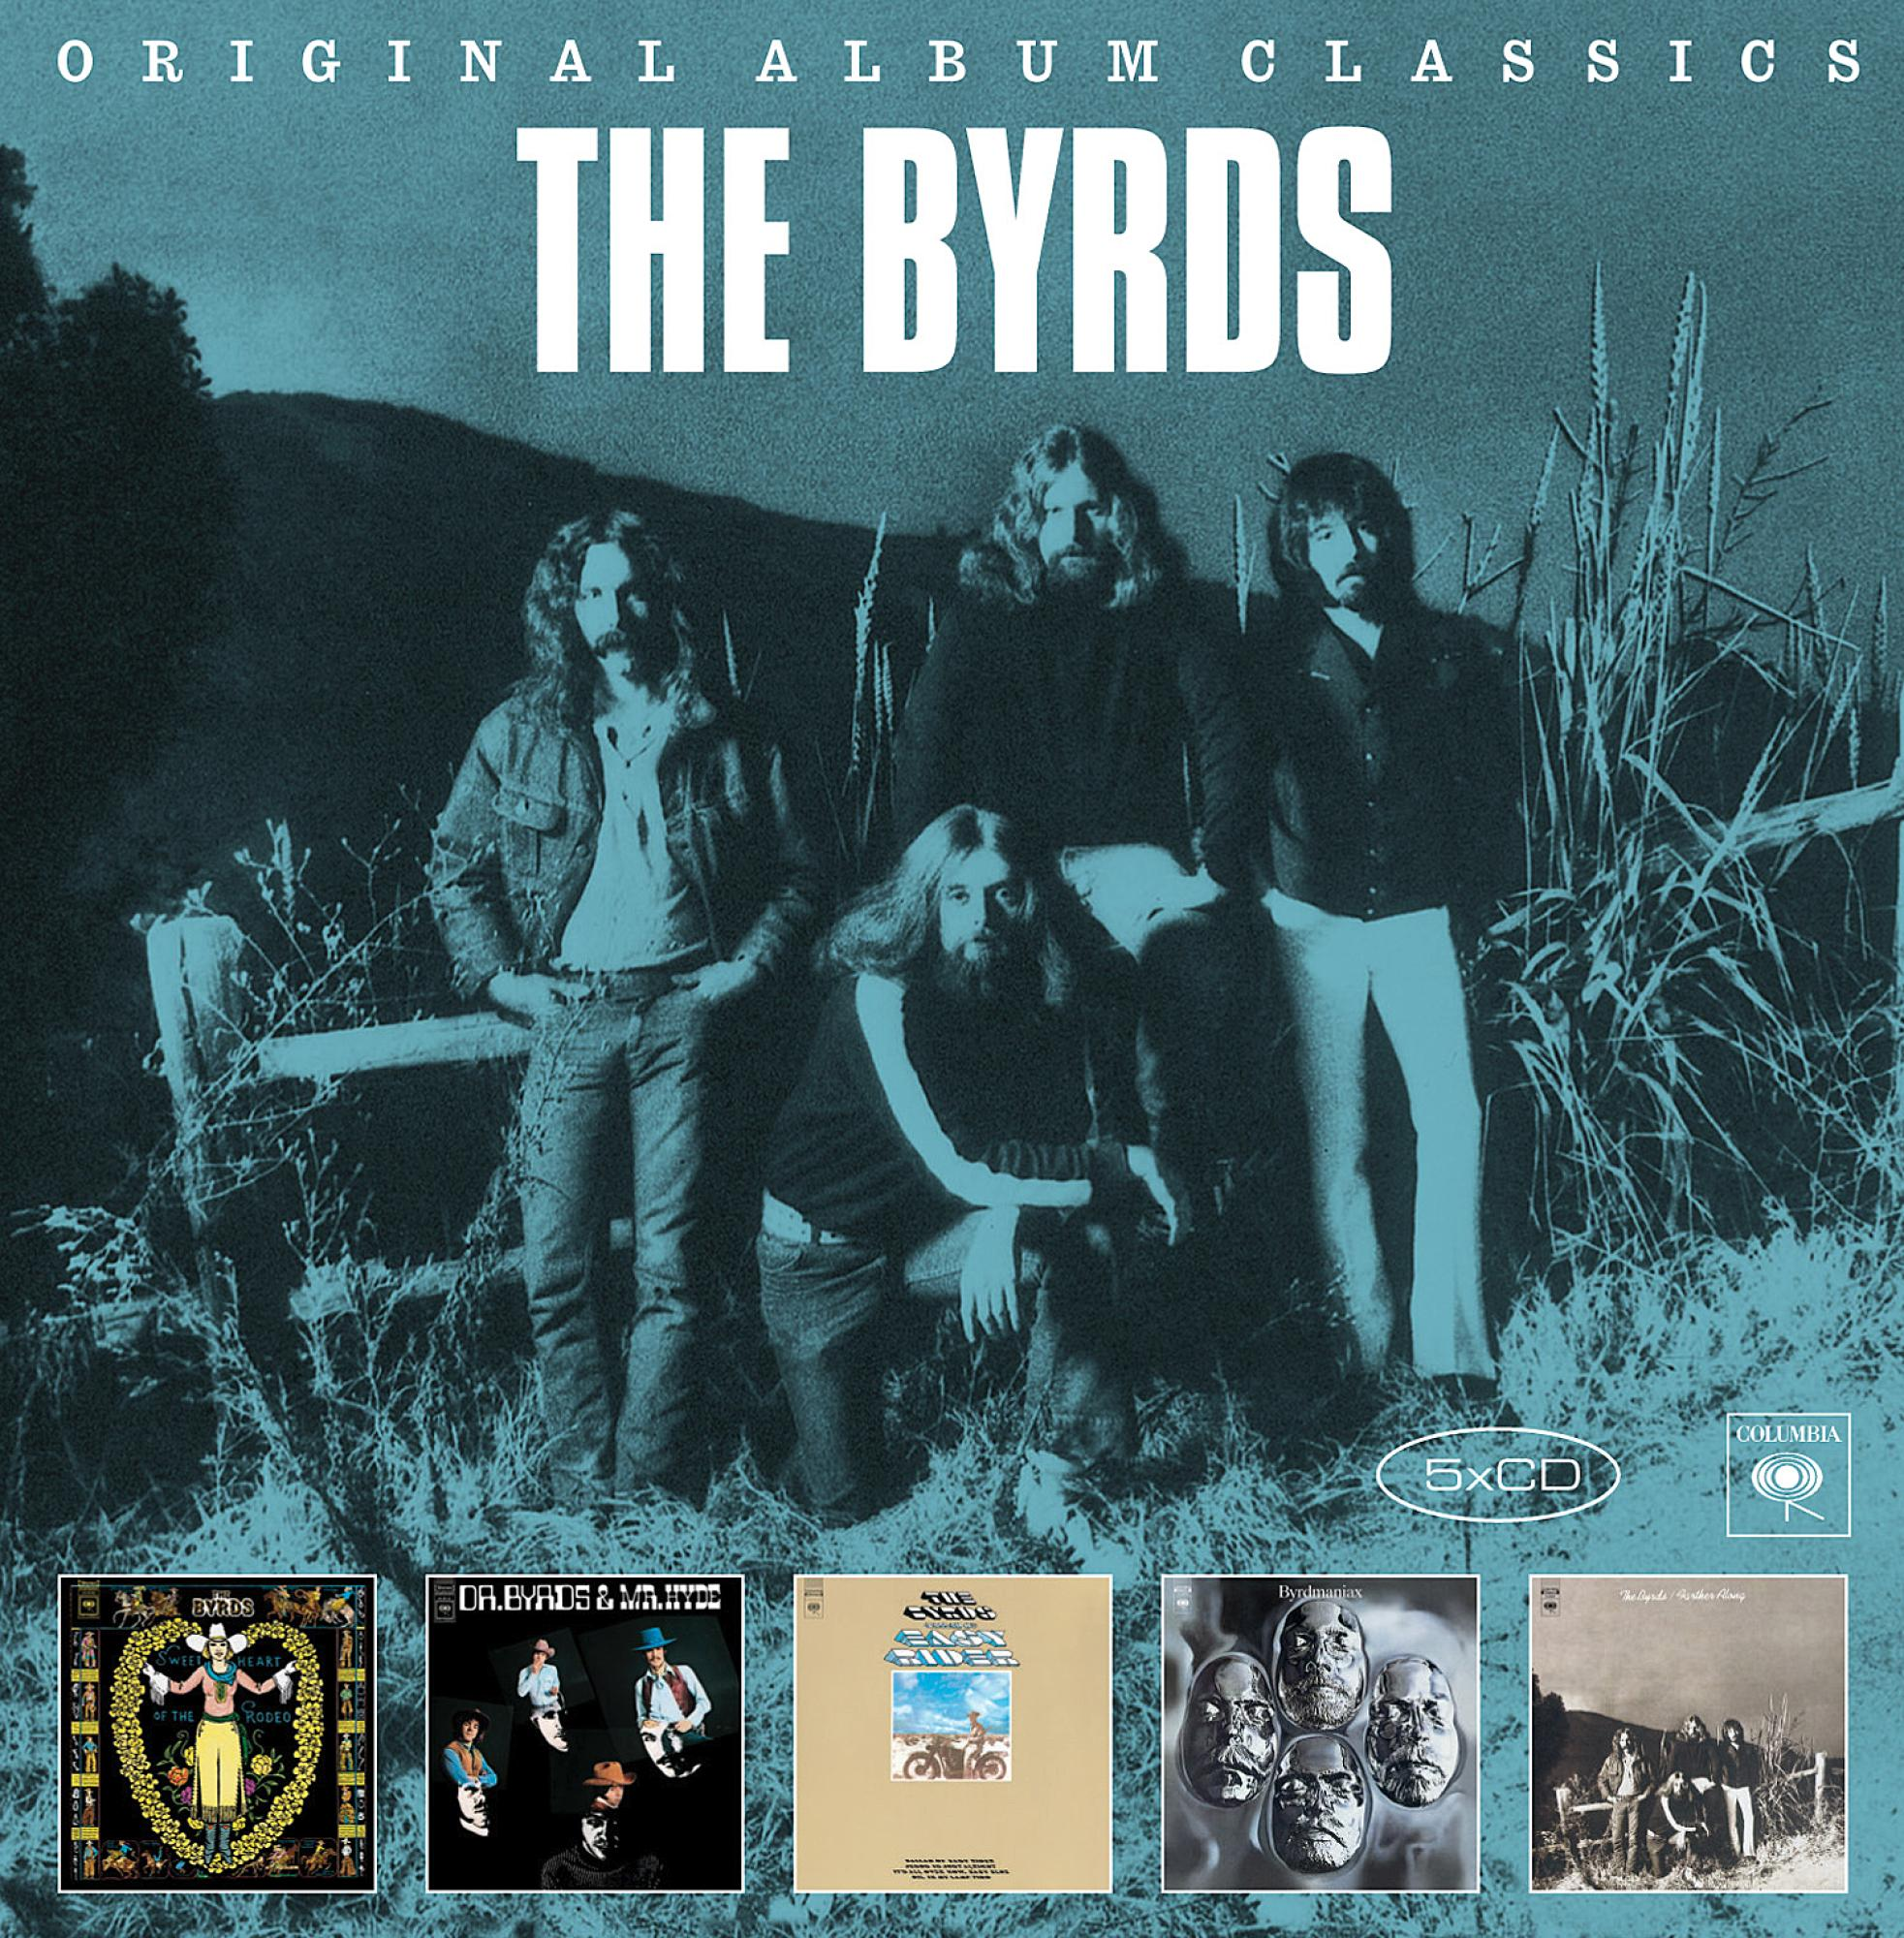 Byrds - The (CD) Album Original - Classics